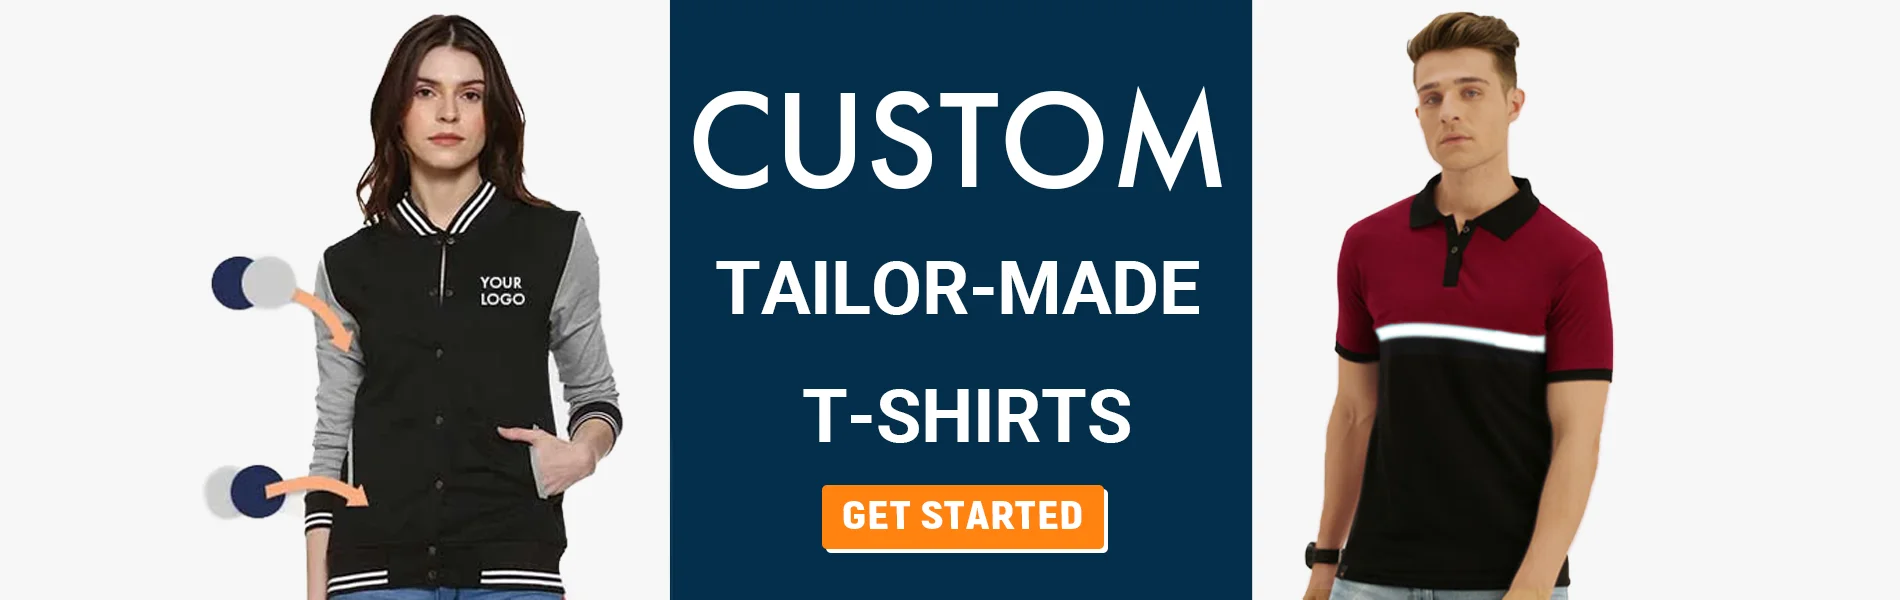 custom tailormade t-shirts roorkee